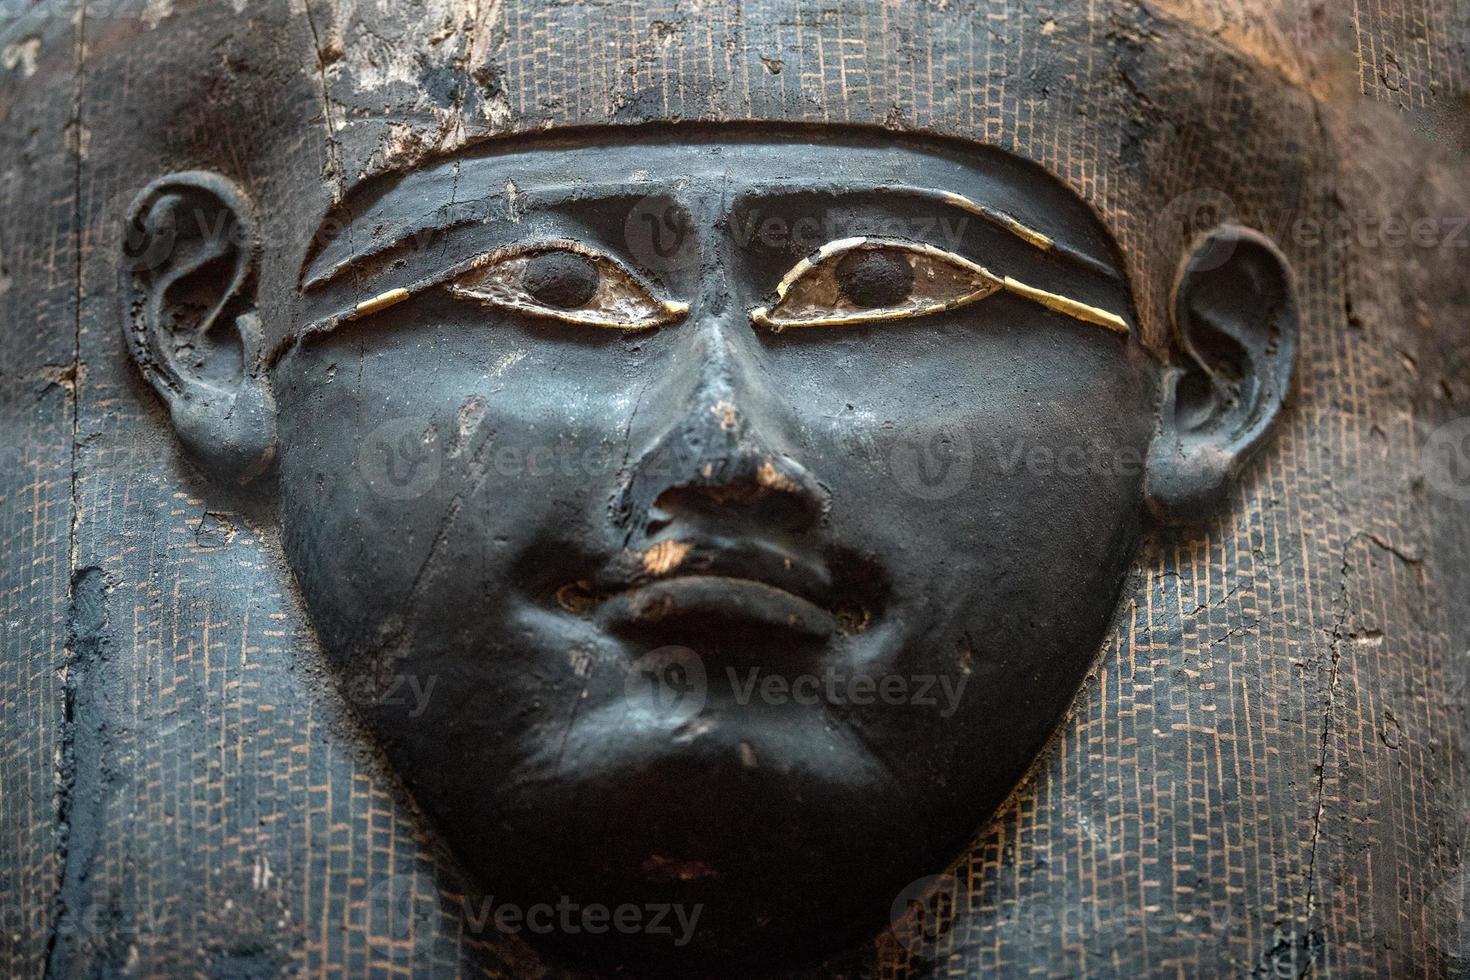 egyptian queen sarcophagus detail close up photo